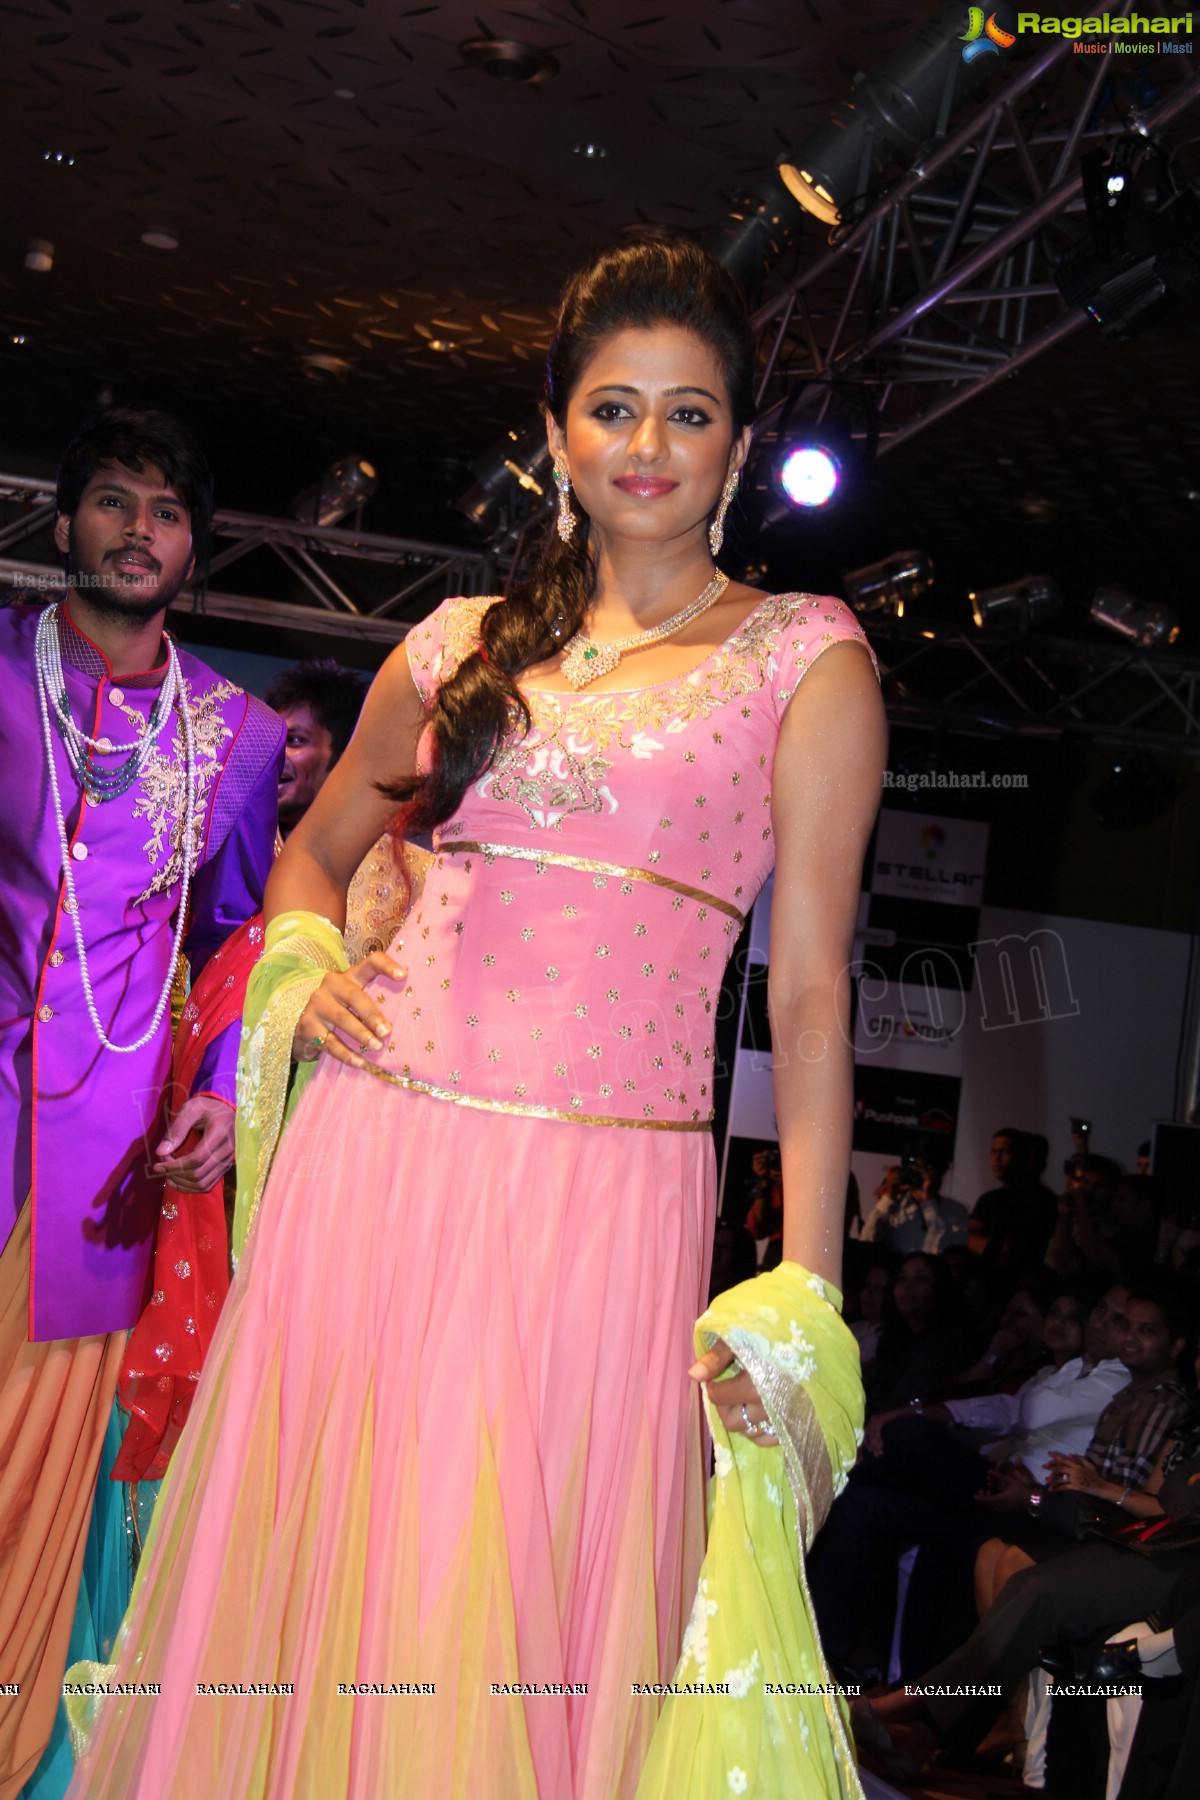 Priyamani walks the ramp at Passionate Foundation Fashion Show - Exclusive Photos